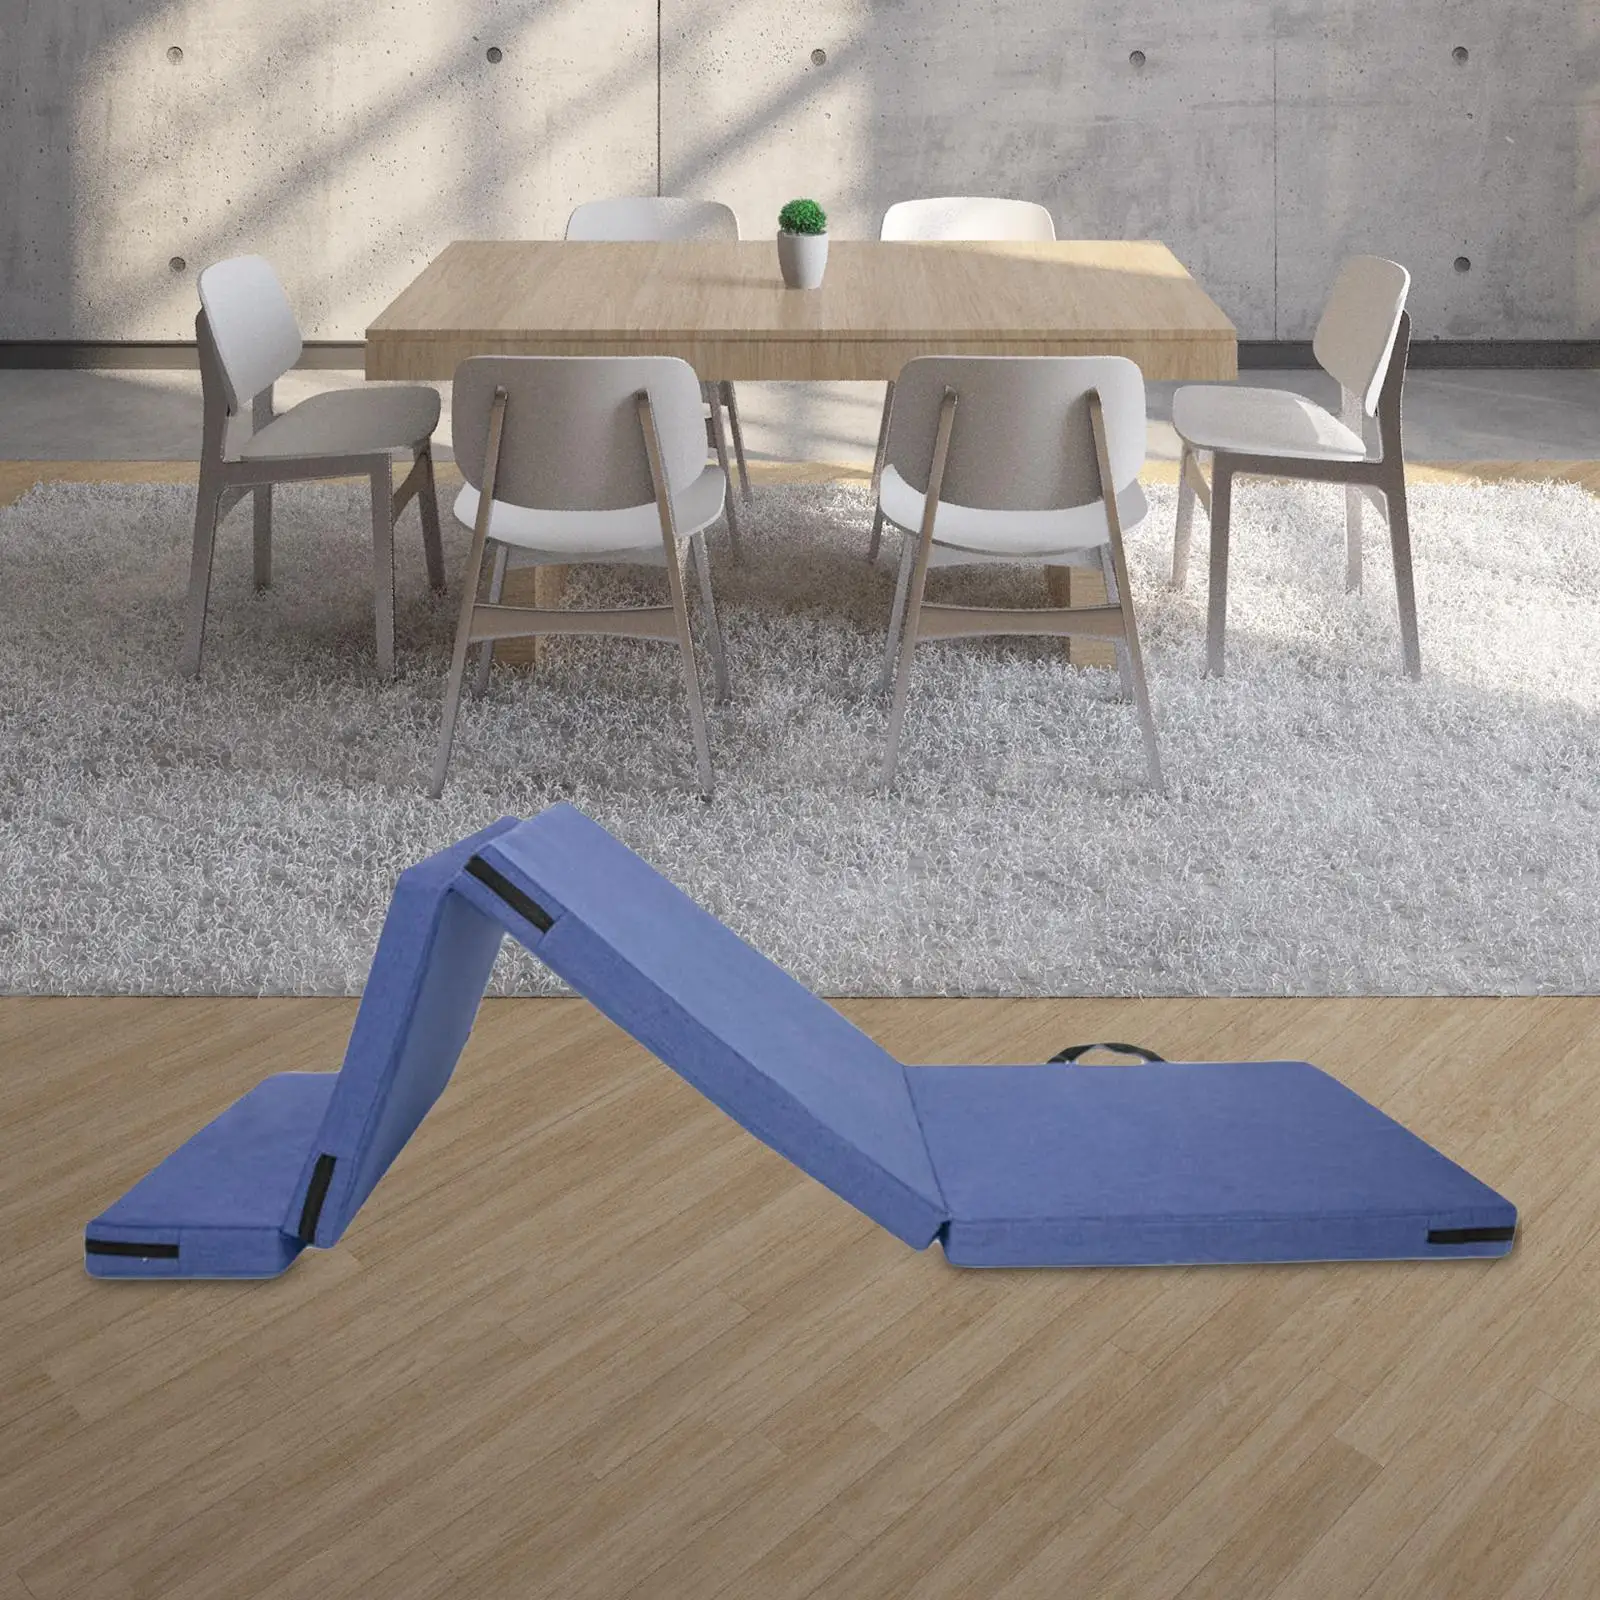 Folding Thick Exercise Mat Protective Flooring Fitness Mat Sleeping Pad for Martial Arts Pilates Gymnastics Gym Tumbling